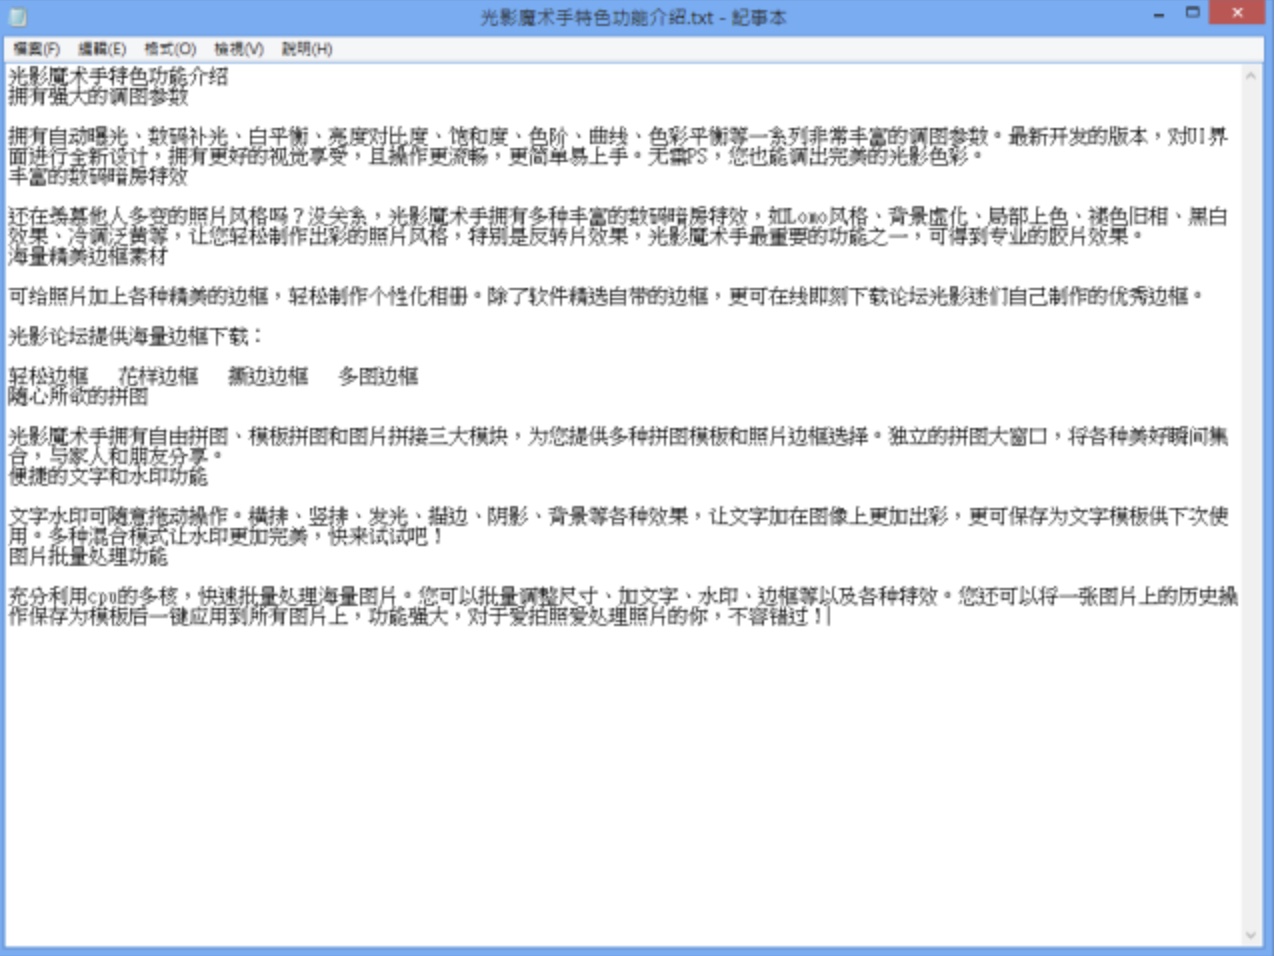 ConvertZ将纯文字档案由简体中文更改为繁体中文